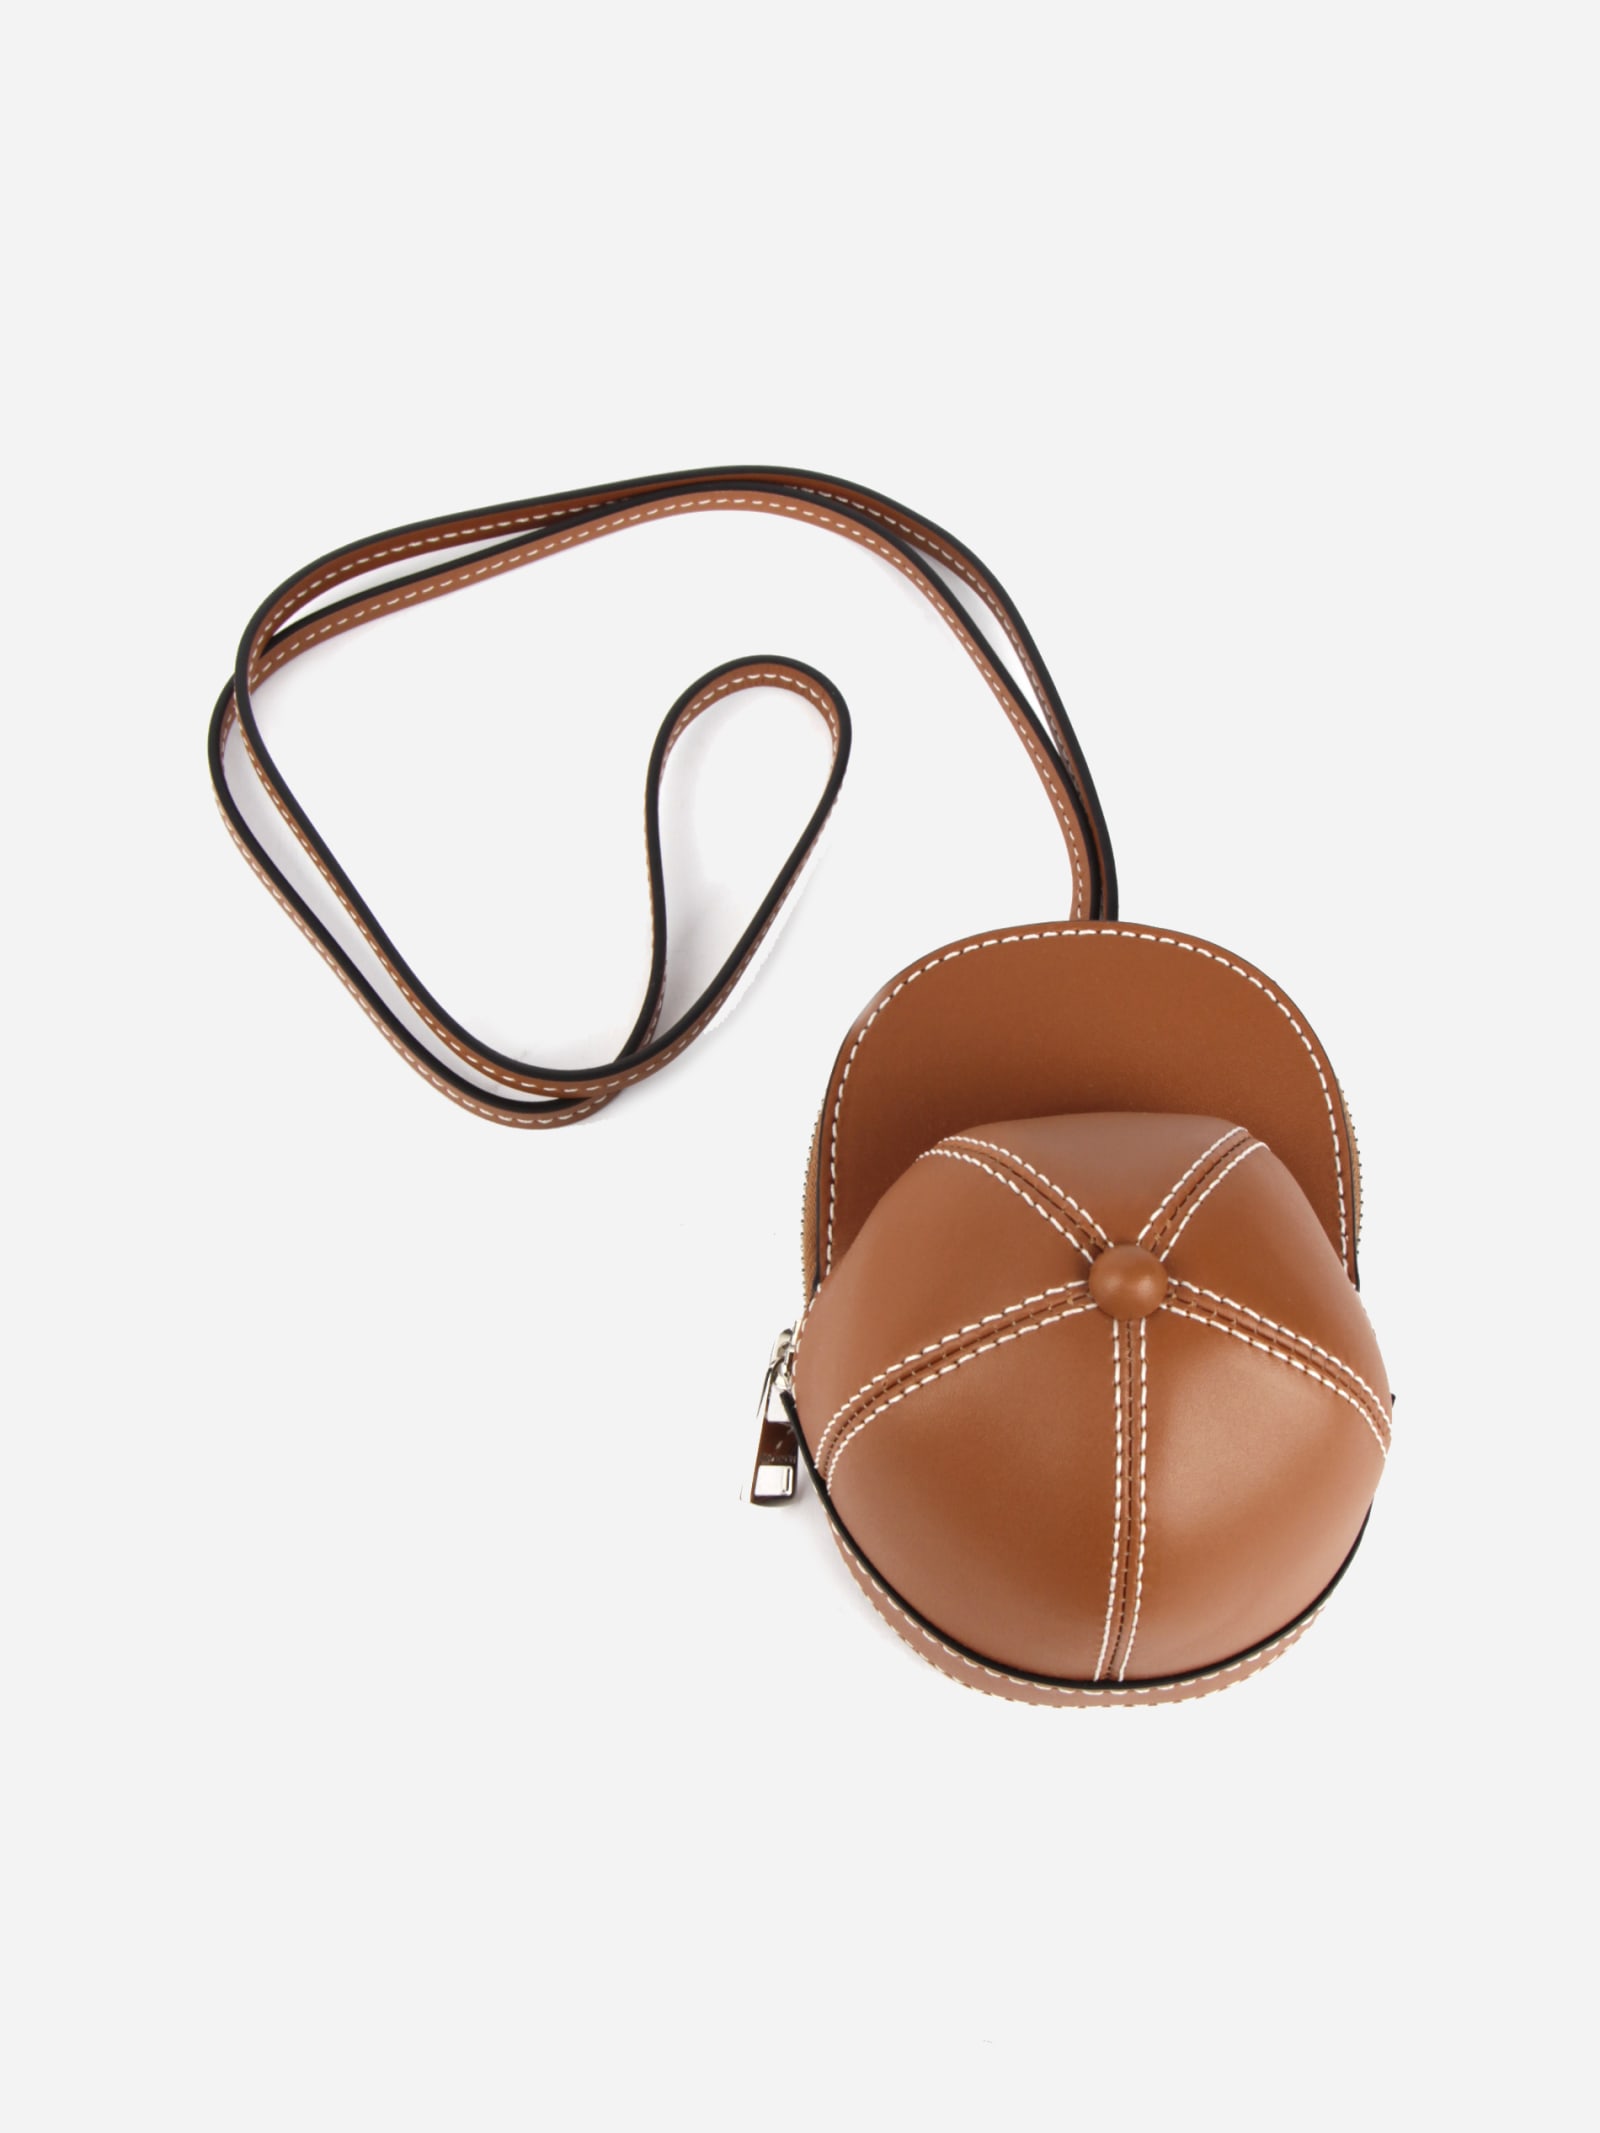 J.W. Anderson Nano Leather Cap Bag